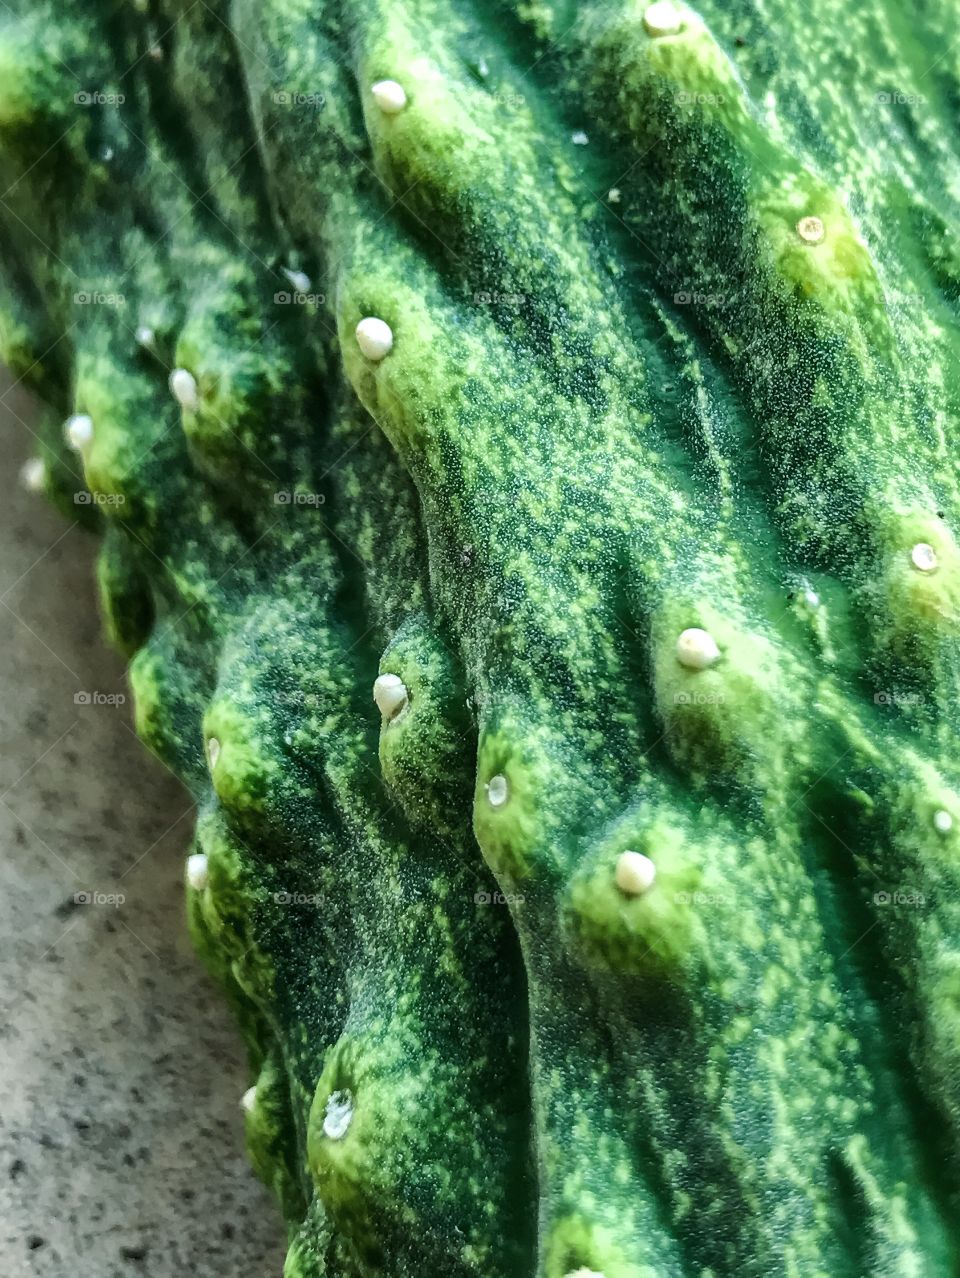 Close-up of green cucumber